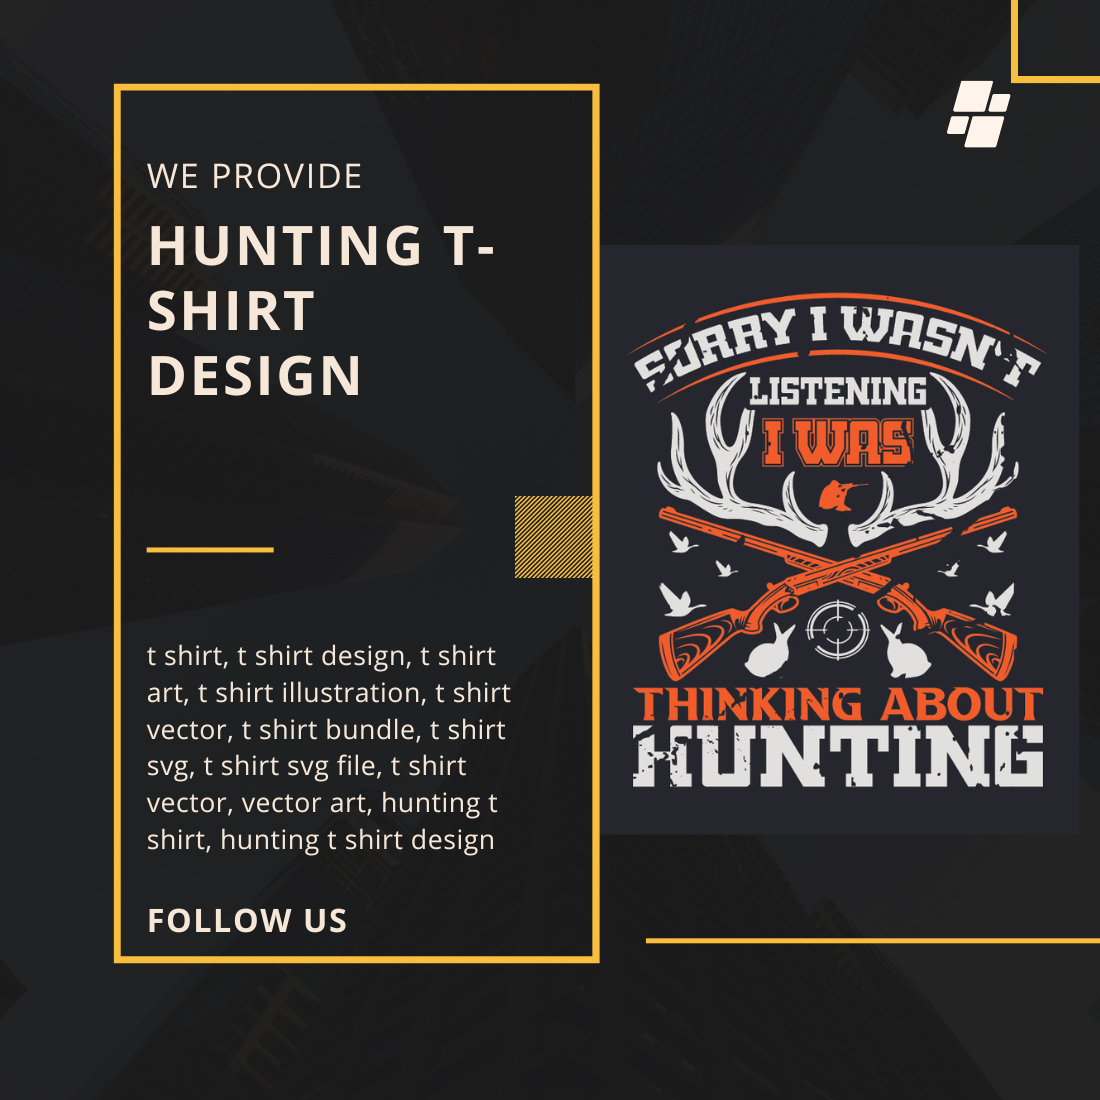 T-shirt Hunting Design Bundle cover image.